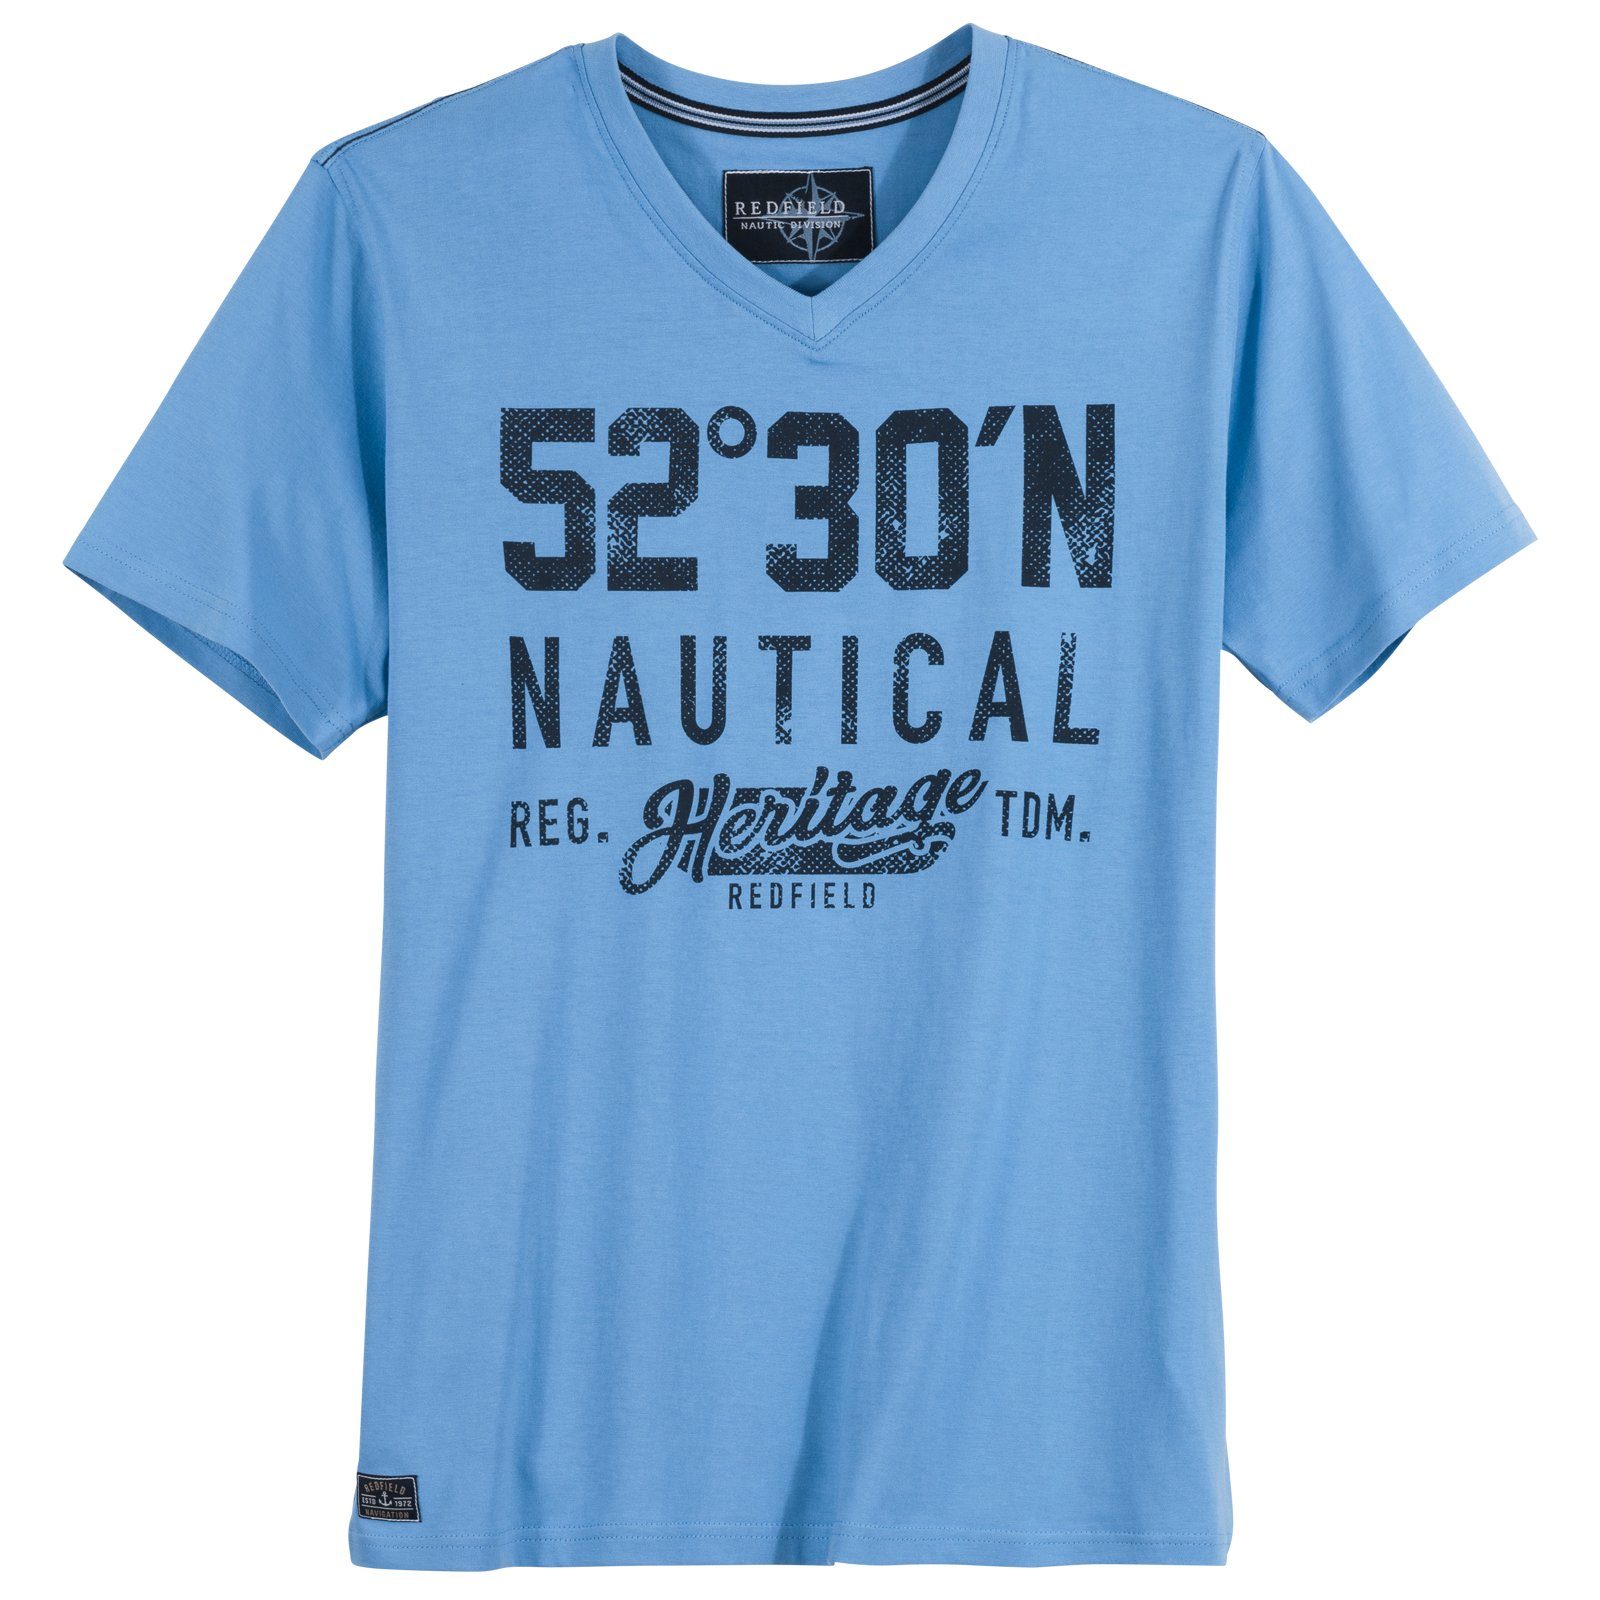 redfield Print-Shirt Übergrößen Herren T-Shirt V-Neck 52°30'N himmelblau Redfield